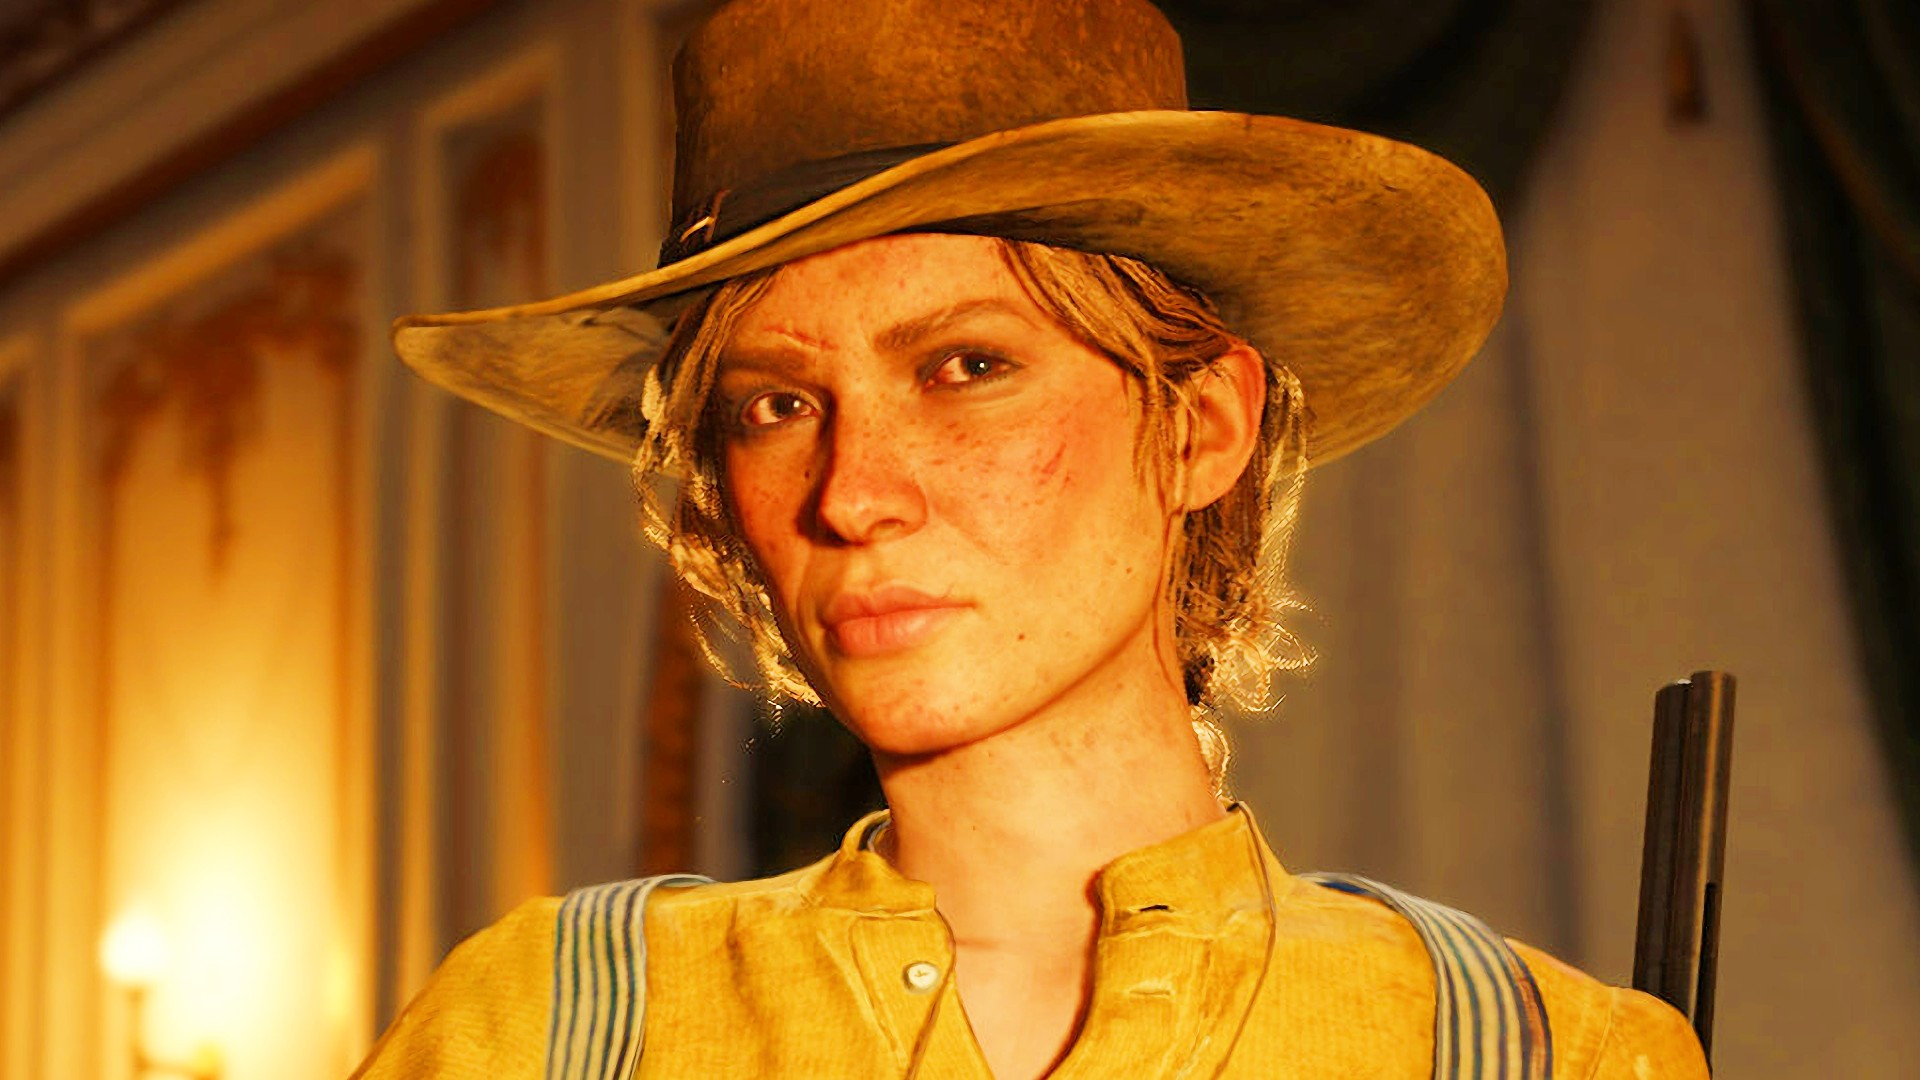 Red Dead Redemption 2 mod brings gender equality to Rockstar's sandbox